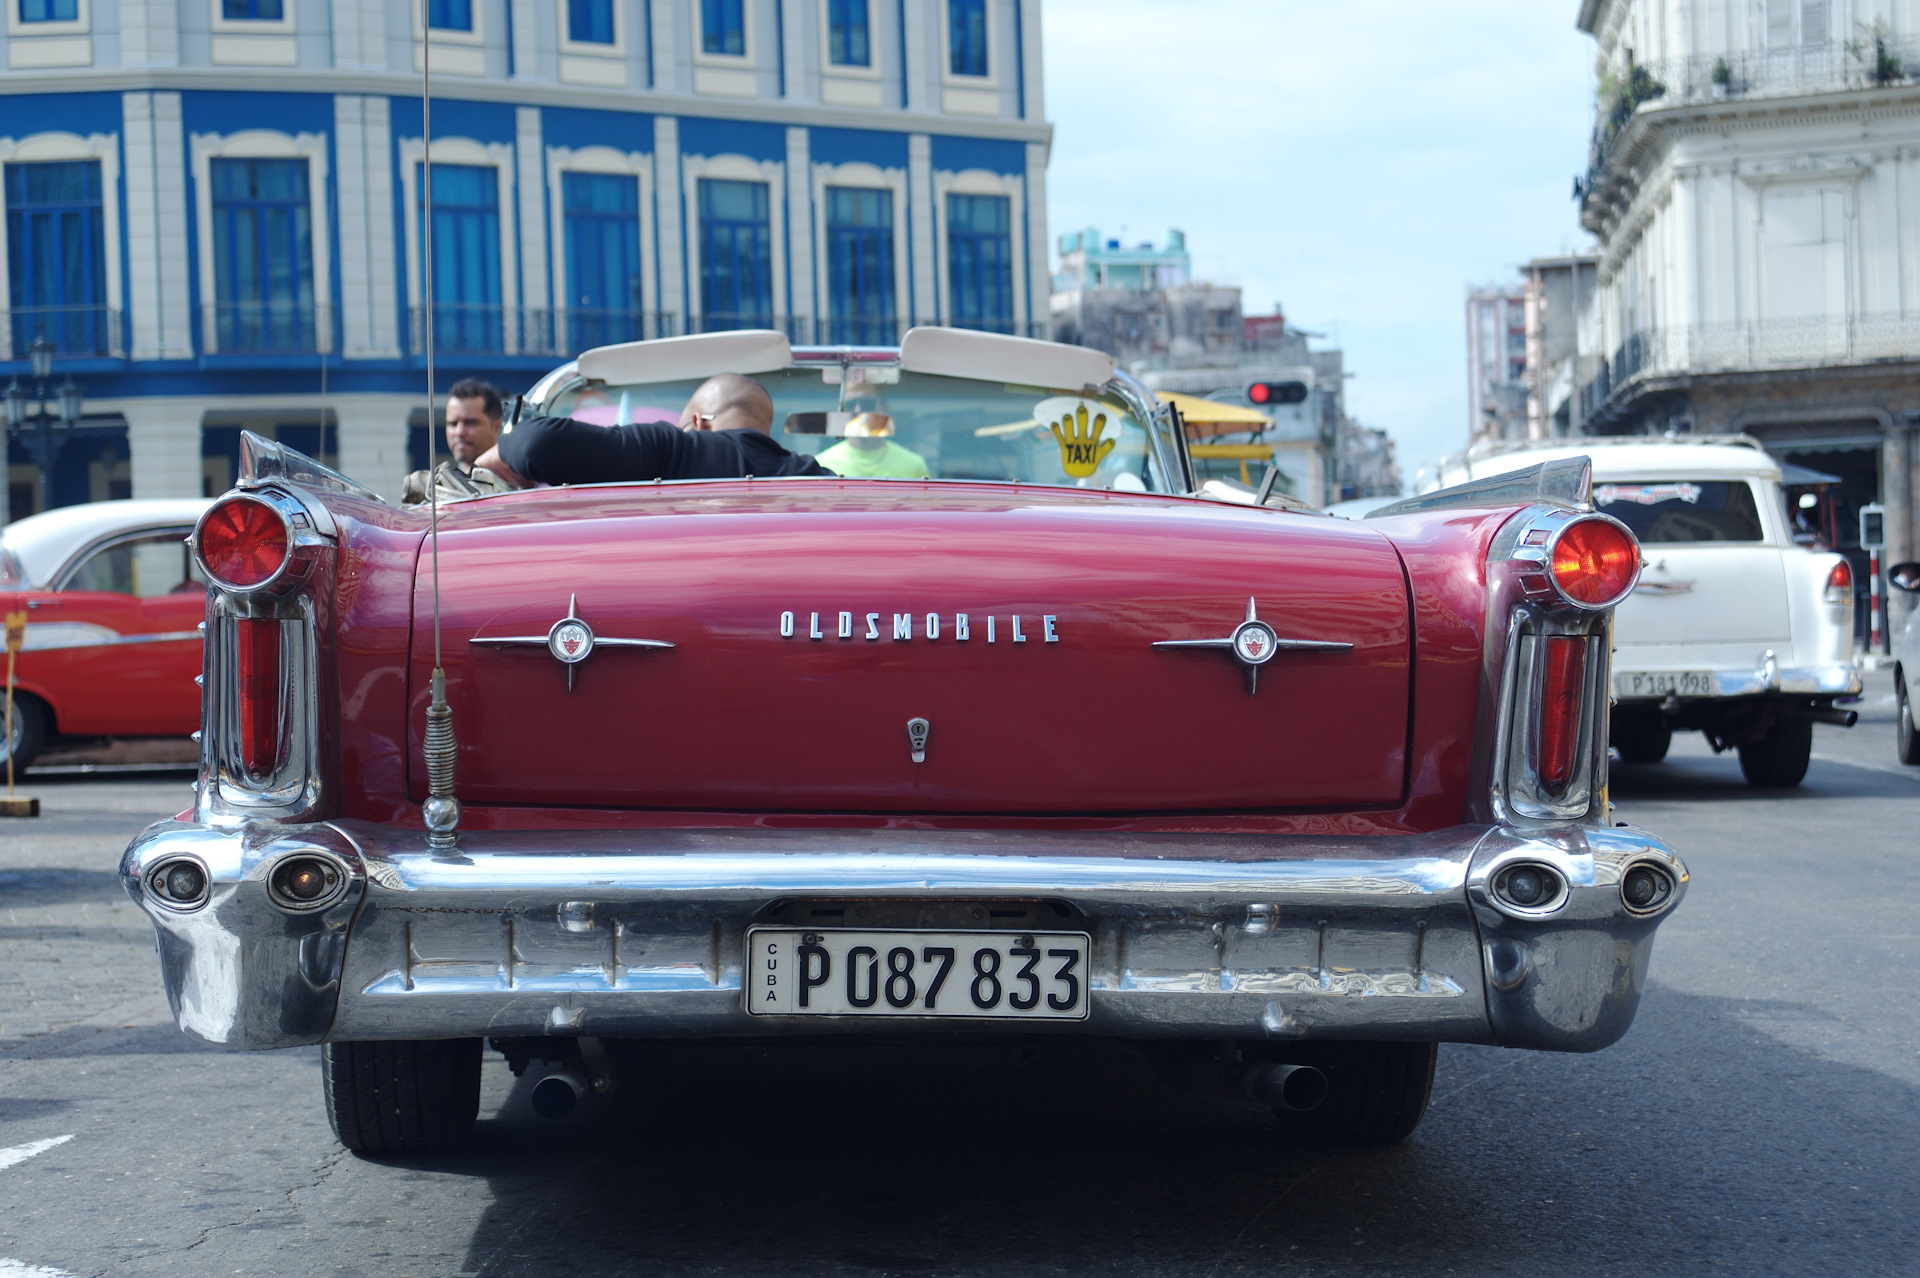 Кубинский номер. Автомобильные номера Куба. Кубинские номера машин. Куба номера машин. Номерные знаки Куба.